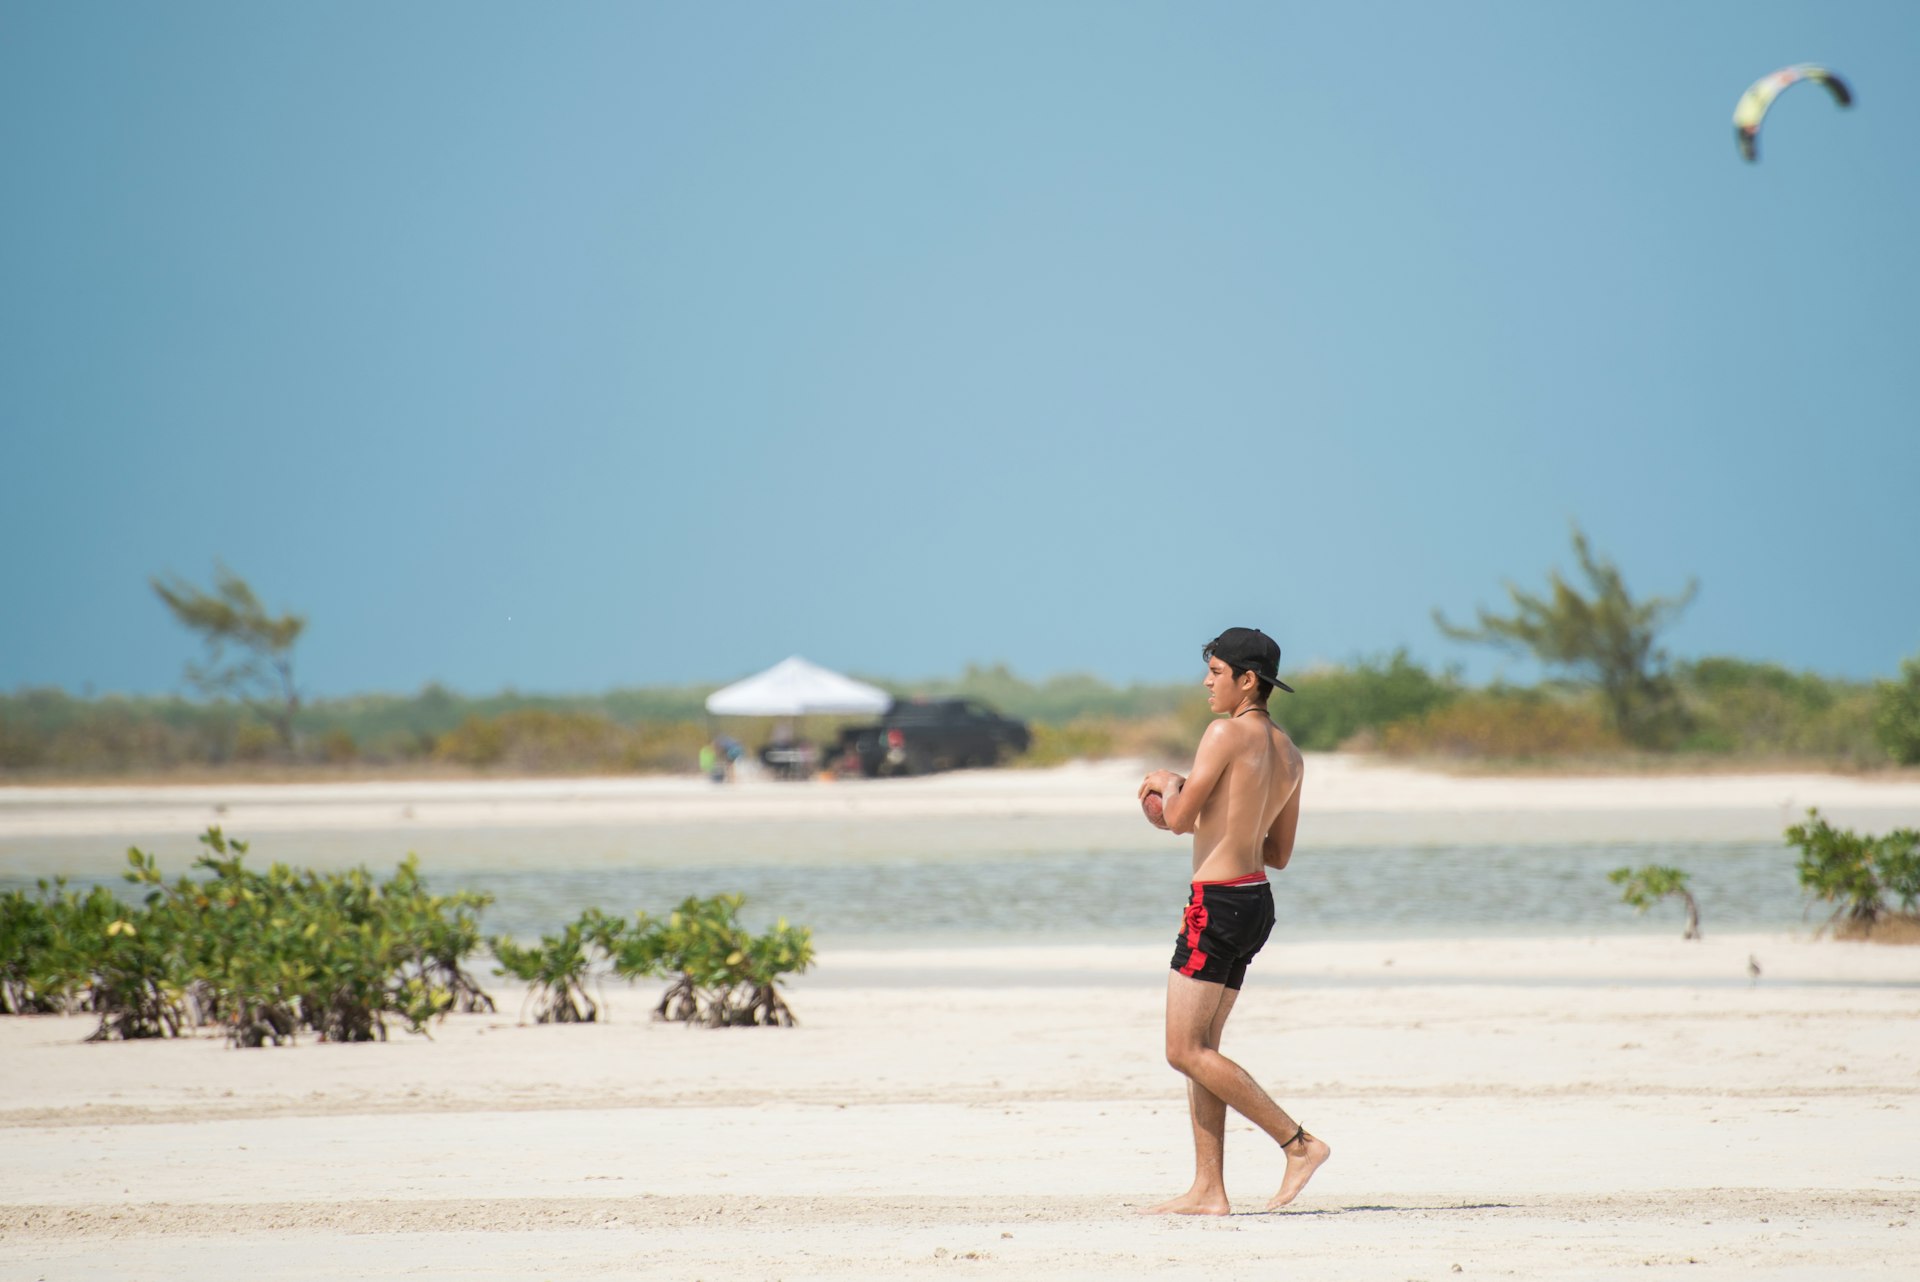 A young man throws a football on a white sand beach at Isla Blanca, Cancún